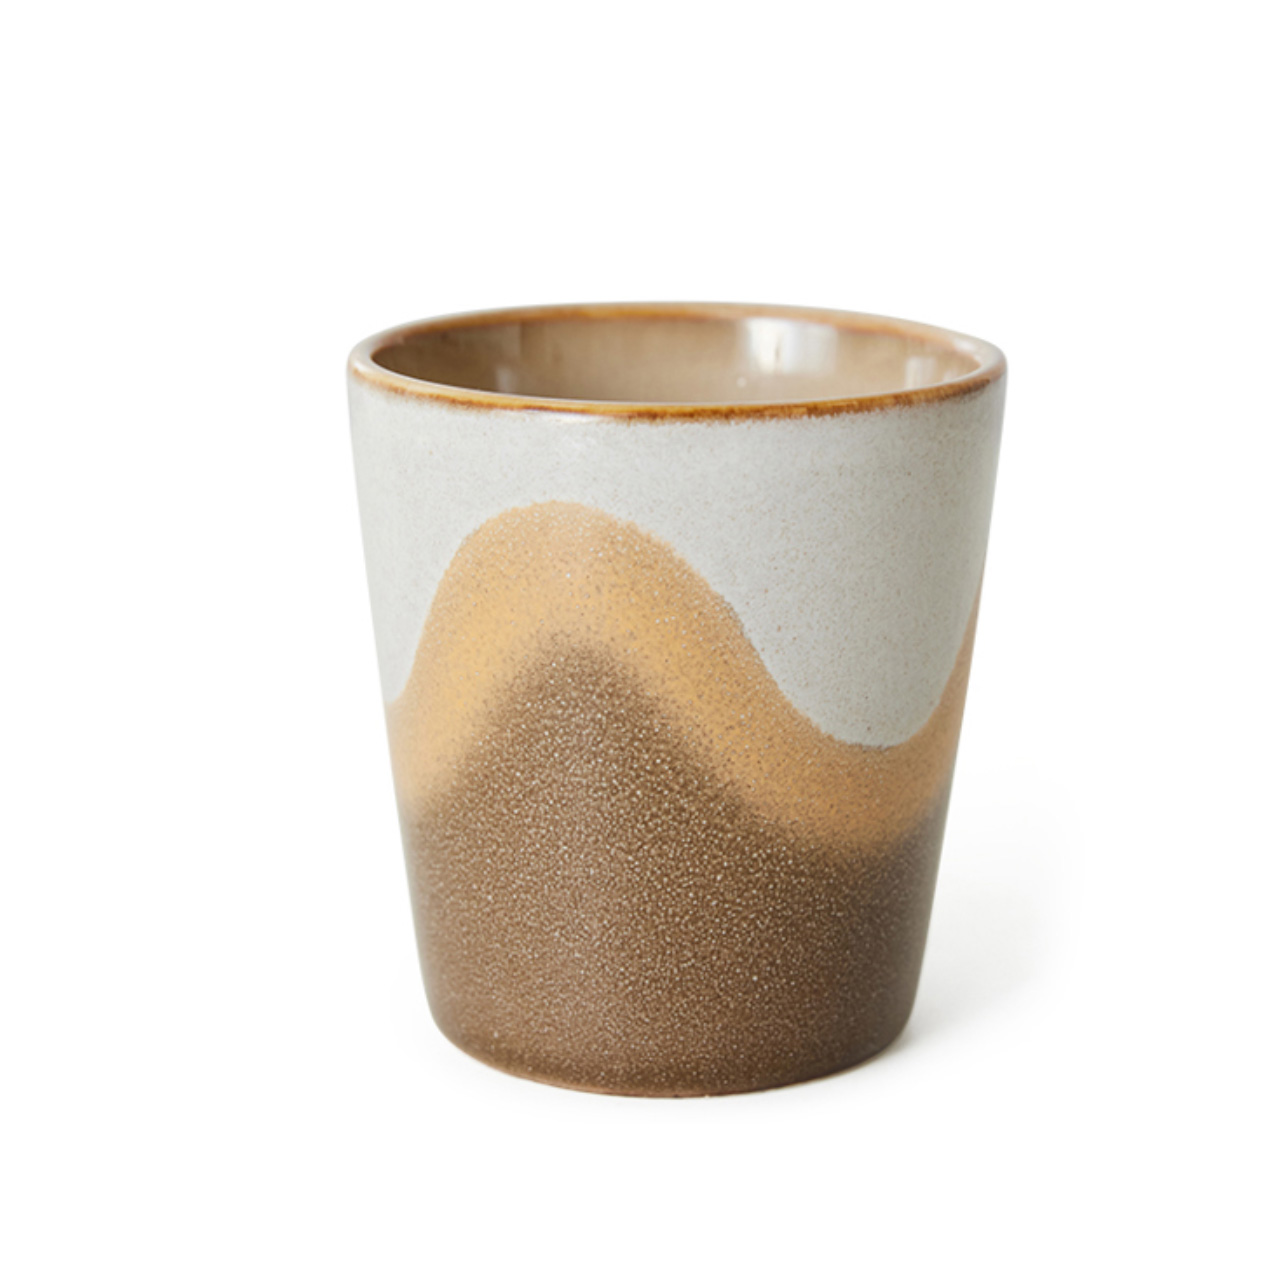 HKliving 70's Kaffee Becher/tea mug, OASIS, Siebziger Jahre Geschirr, coffee, Keramik  